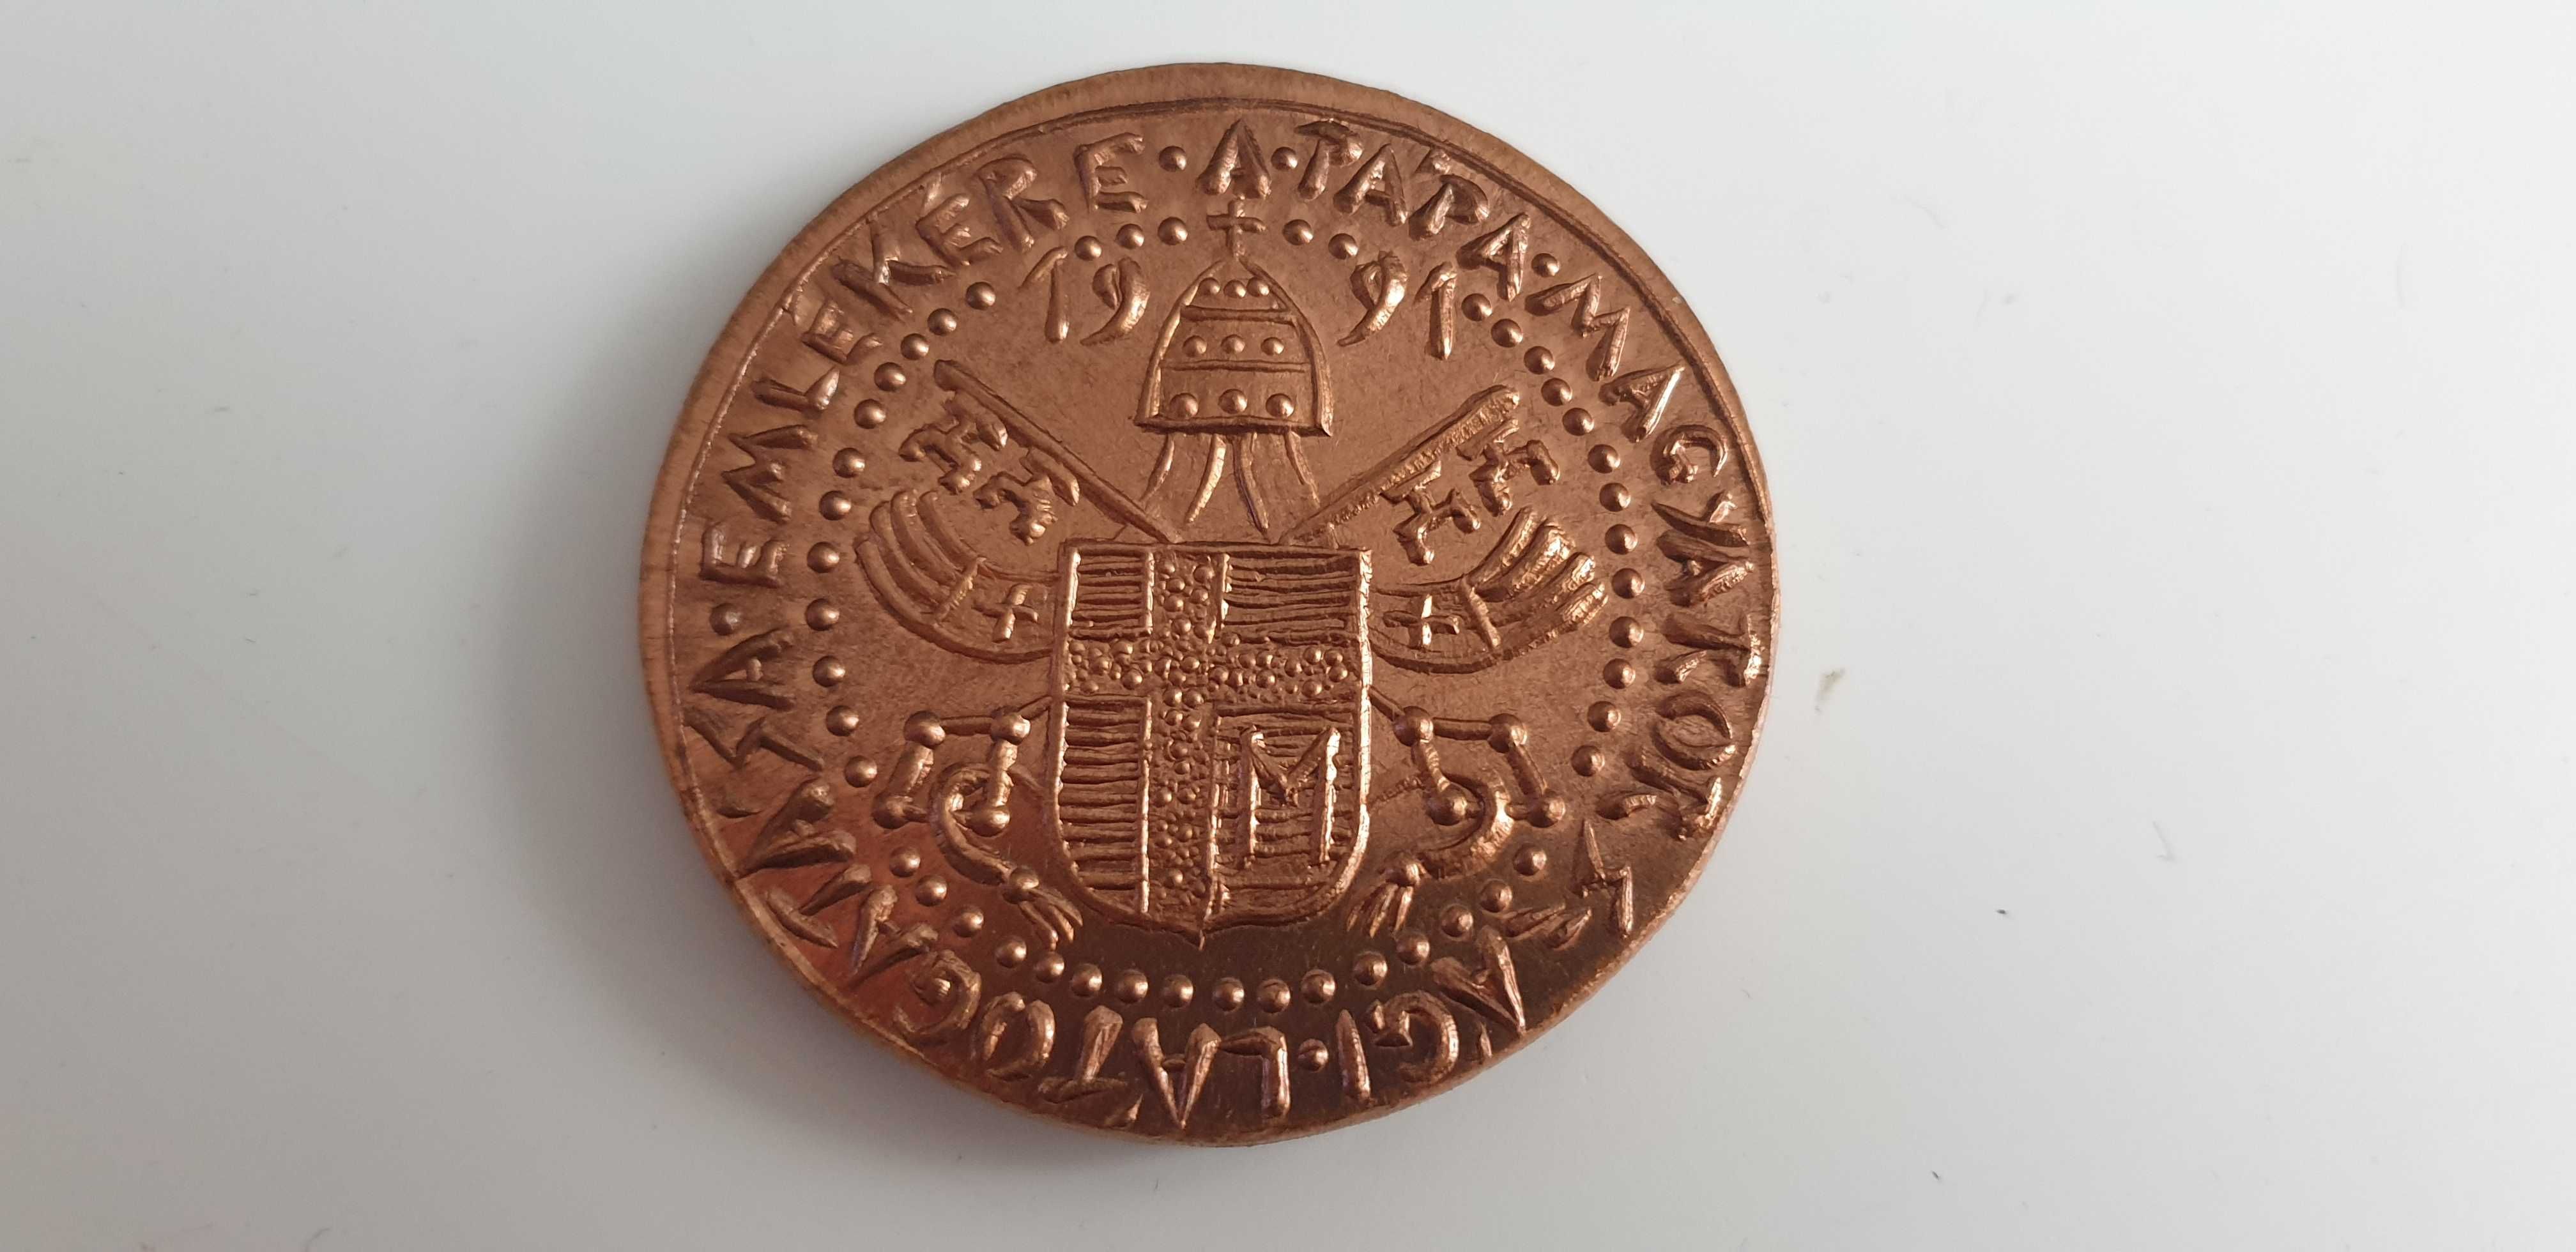 Starocie z Gdyni - Medal z Papieżem do rozpoznania